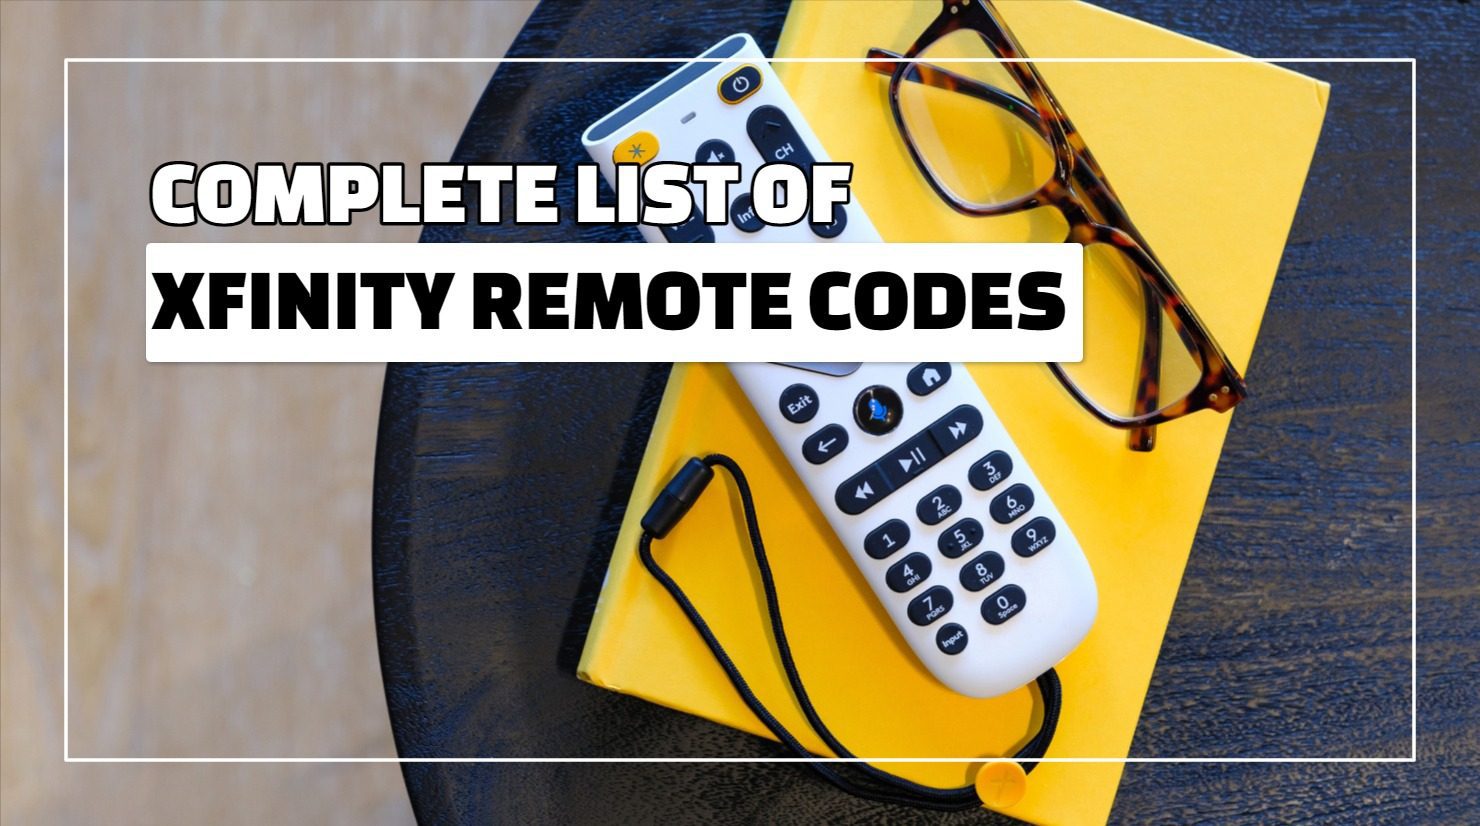 Xfinity Remote Codes